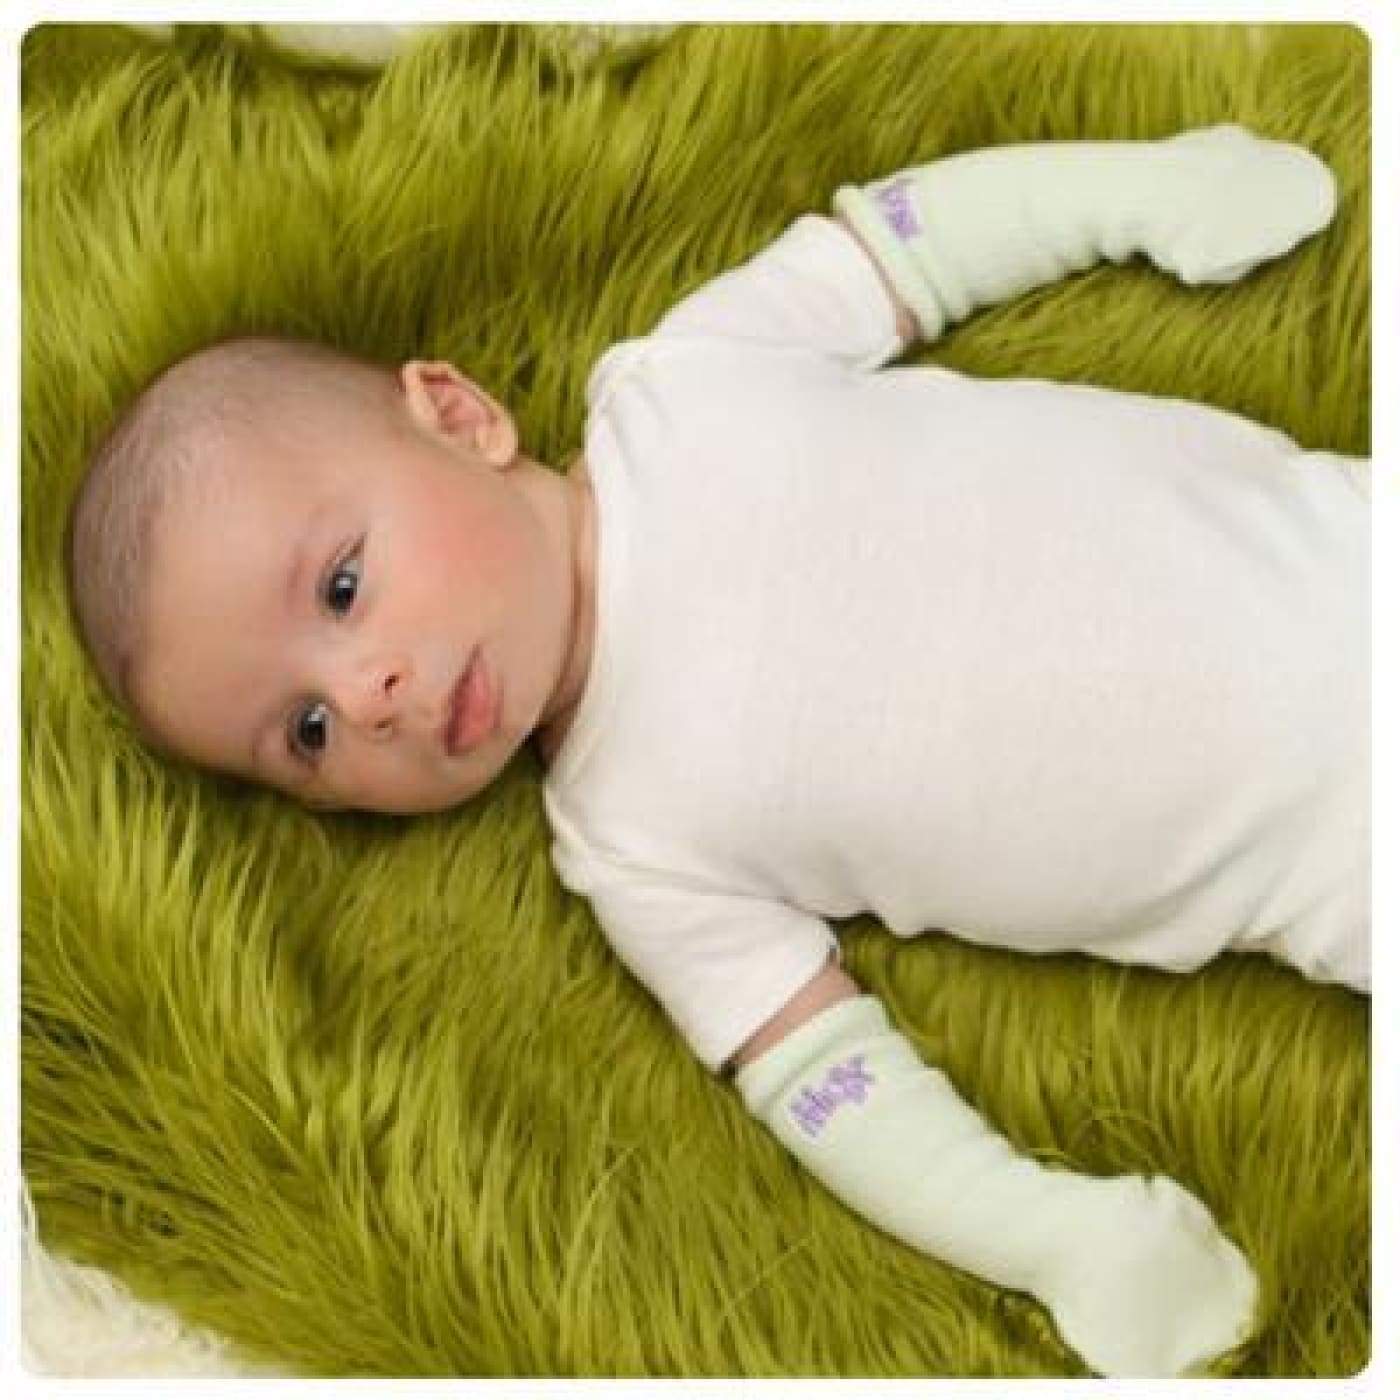 Woombie Mox Mittens - Lemon/Light Green 2PK - BABY & TODDLER CLOTHING - MITTENS/SOCKS/SHOES